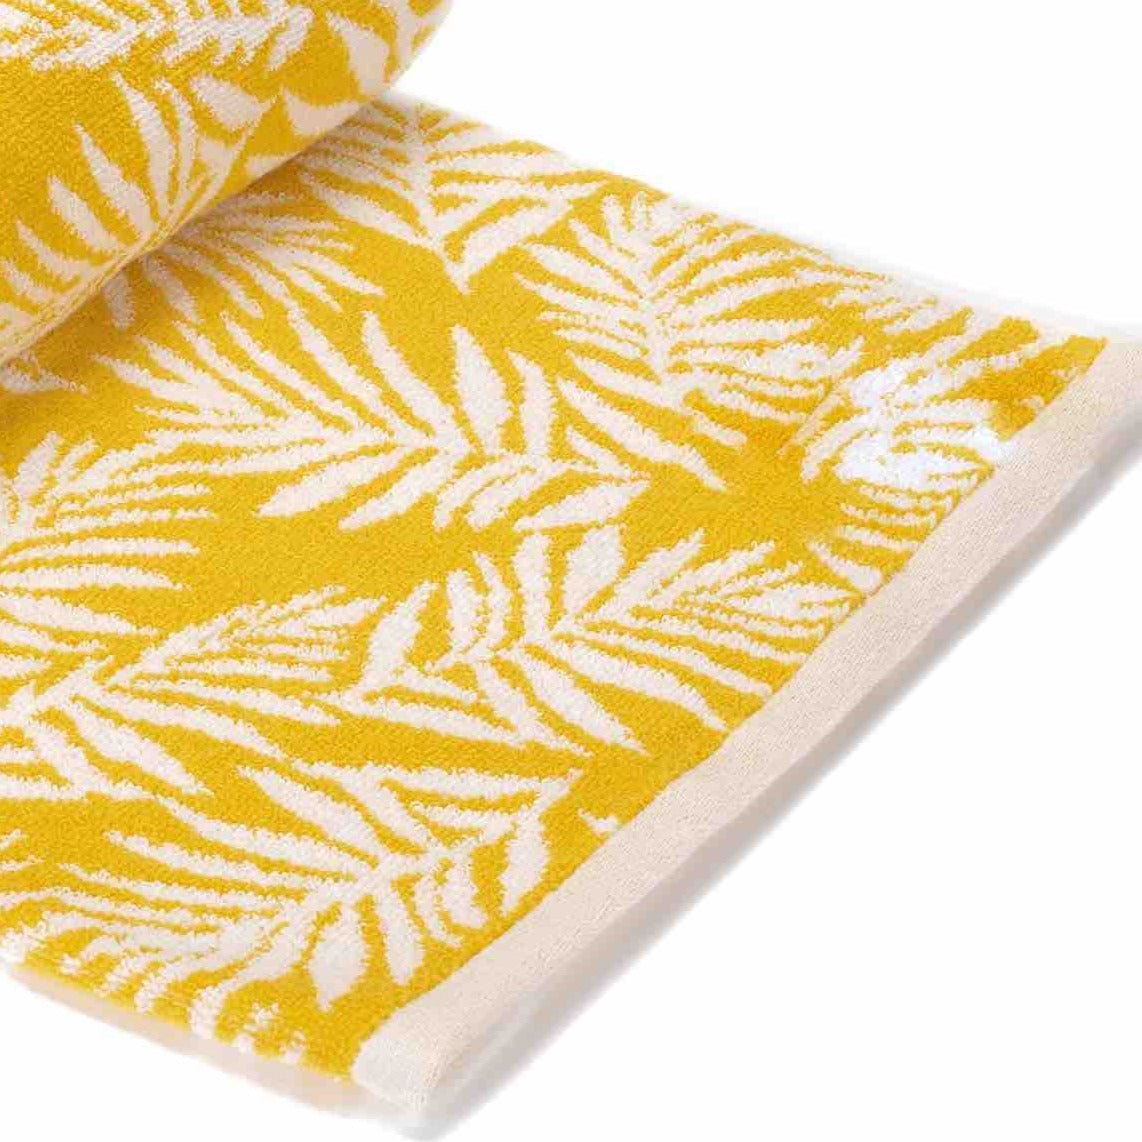 Riggs Leaf Jacquard Towel - Mustard